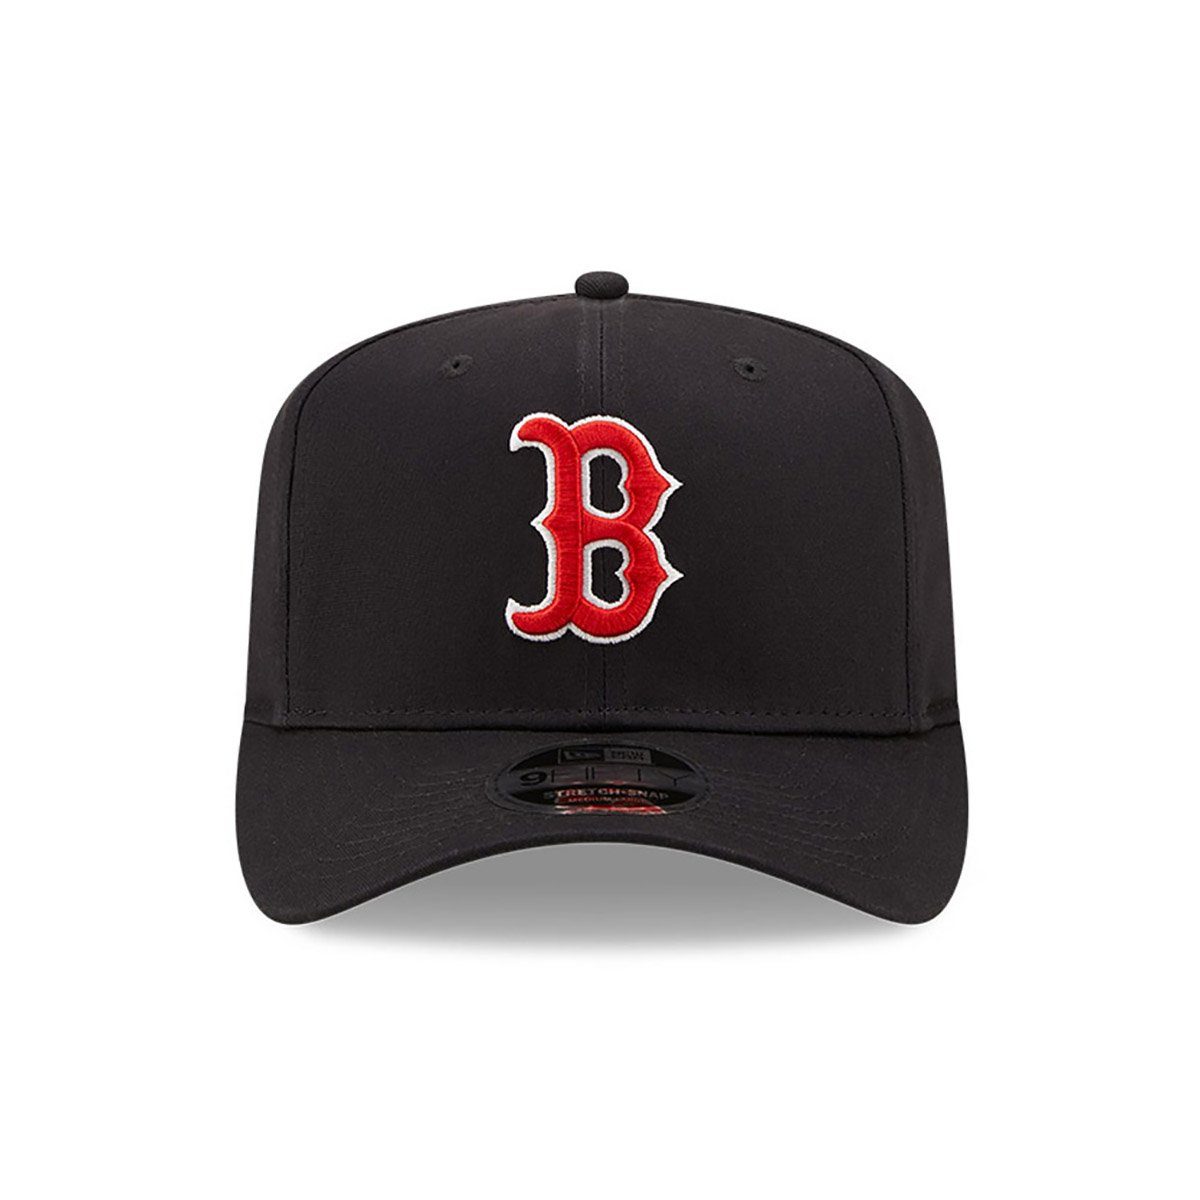 New Era Baseball Cap 9FIFTY Team Logo Red Sox MLB Boston